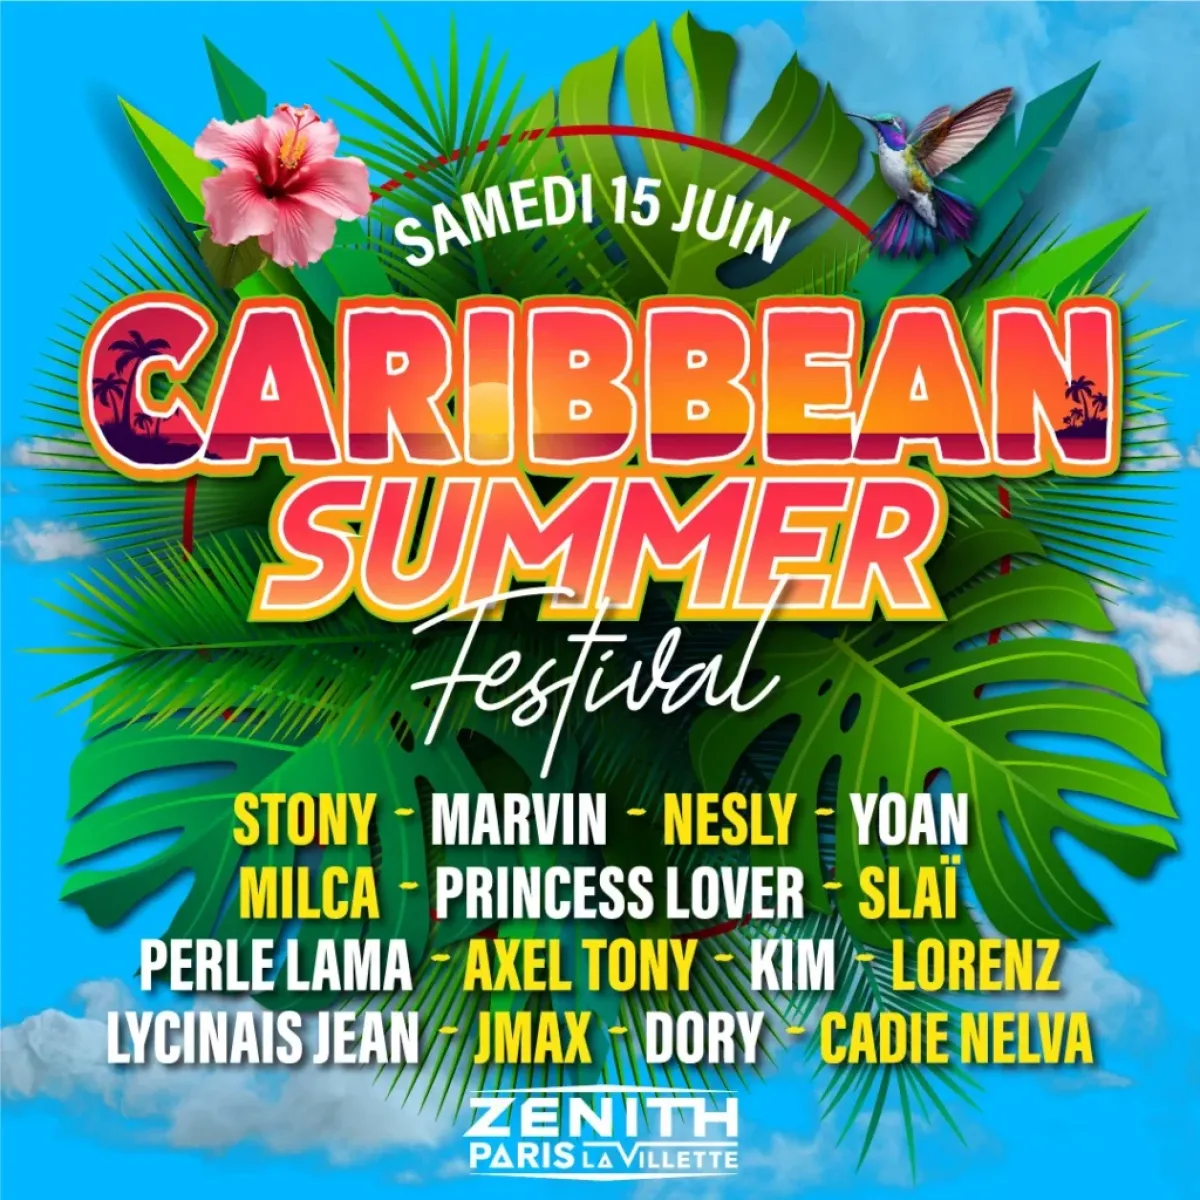 Caribbean Summer Festival al Zenith Paris Tickets